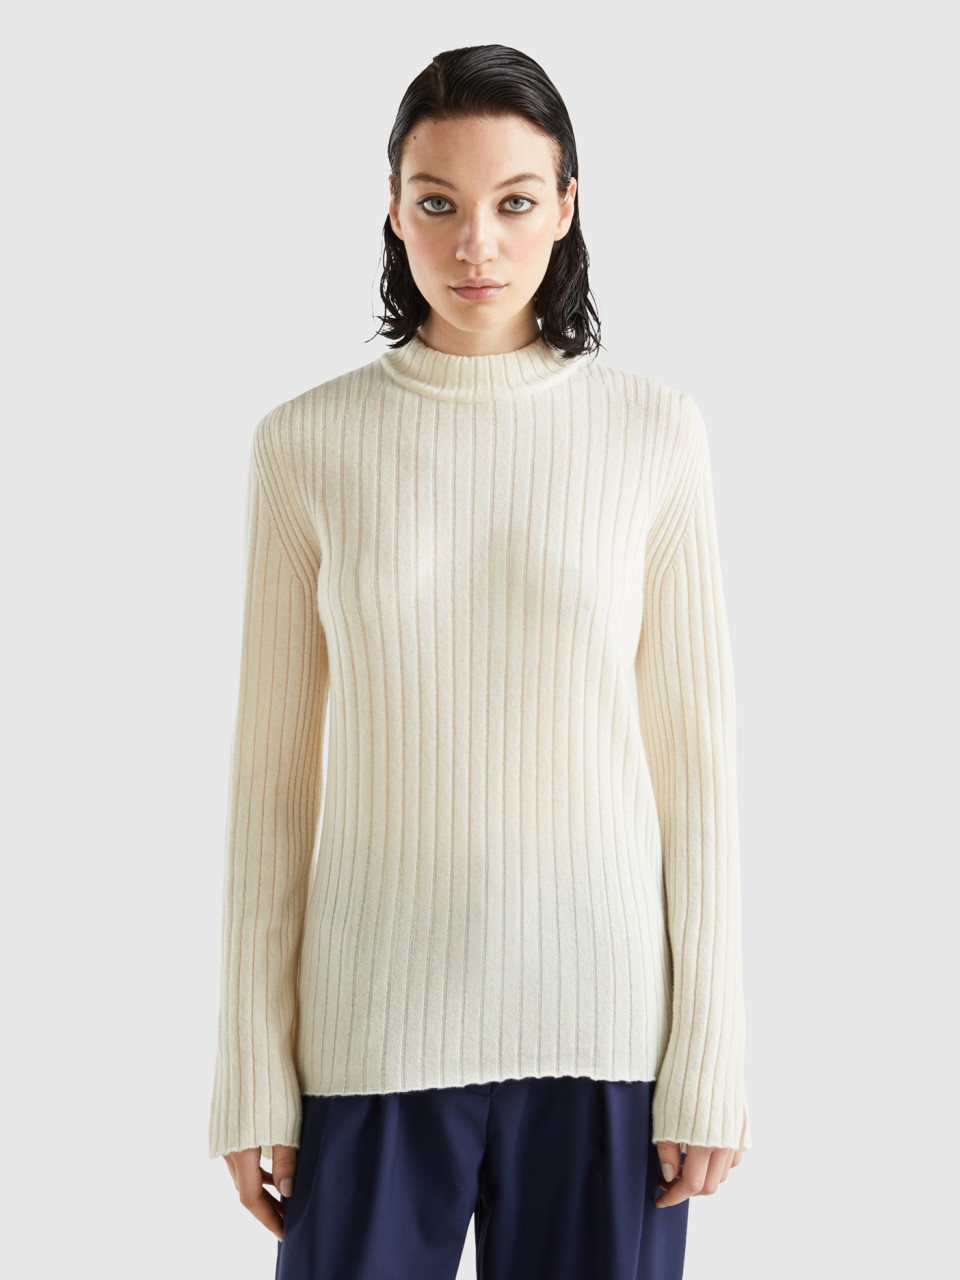 Benetton, Turtleneck Sweater With Slits, Creamy White, Women